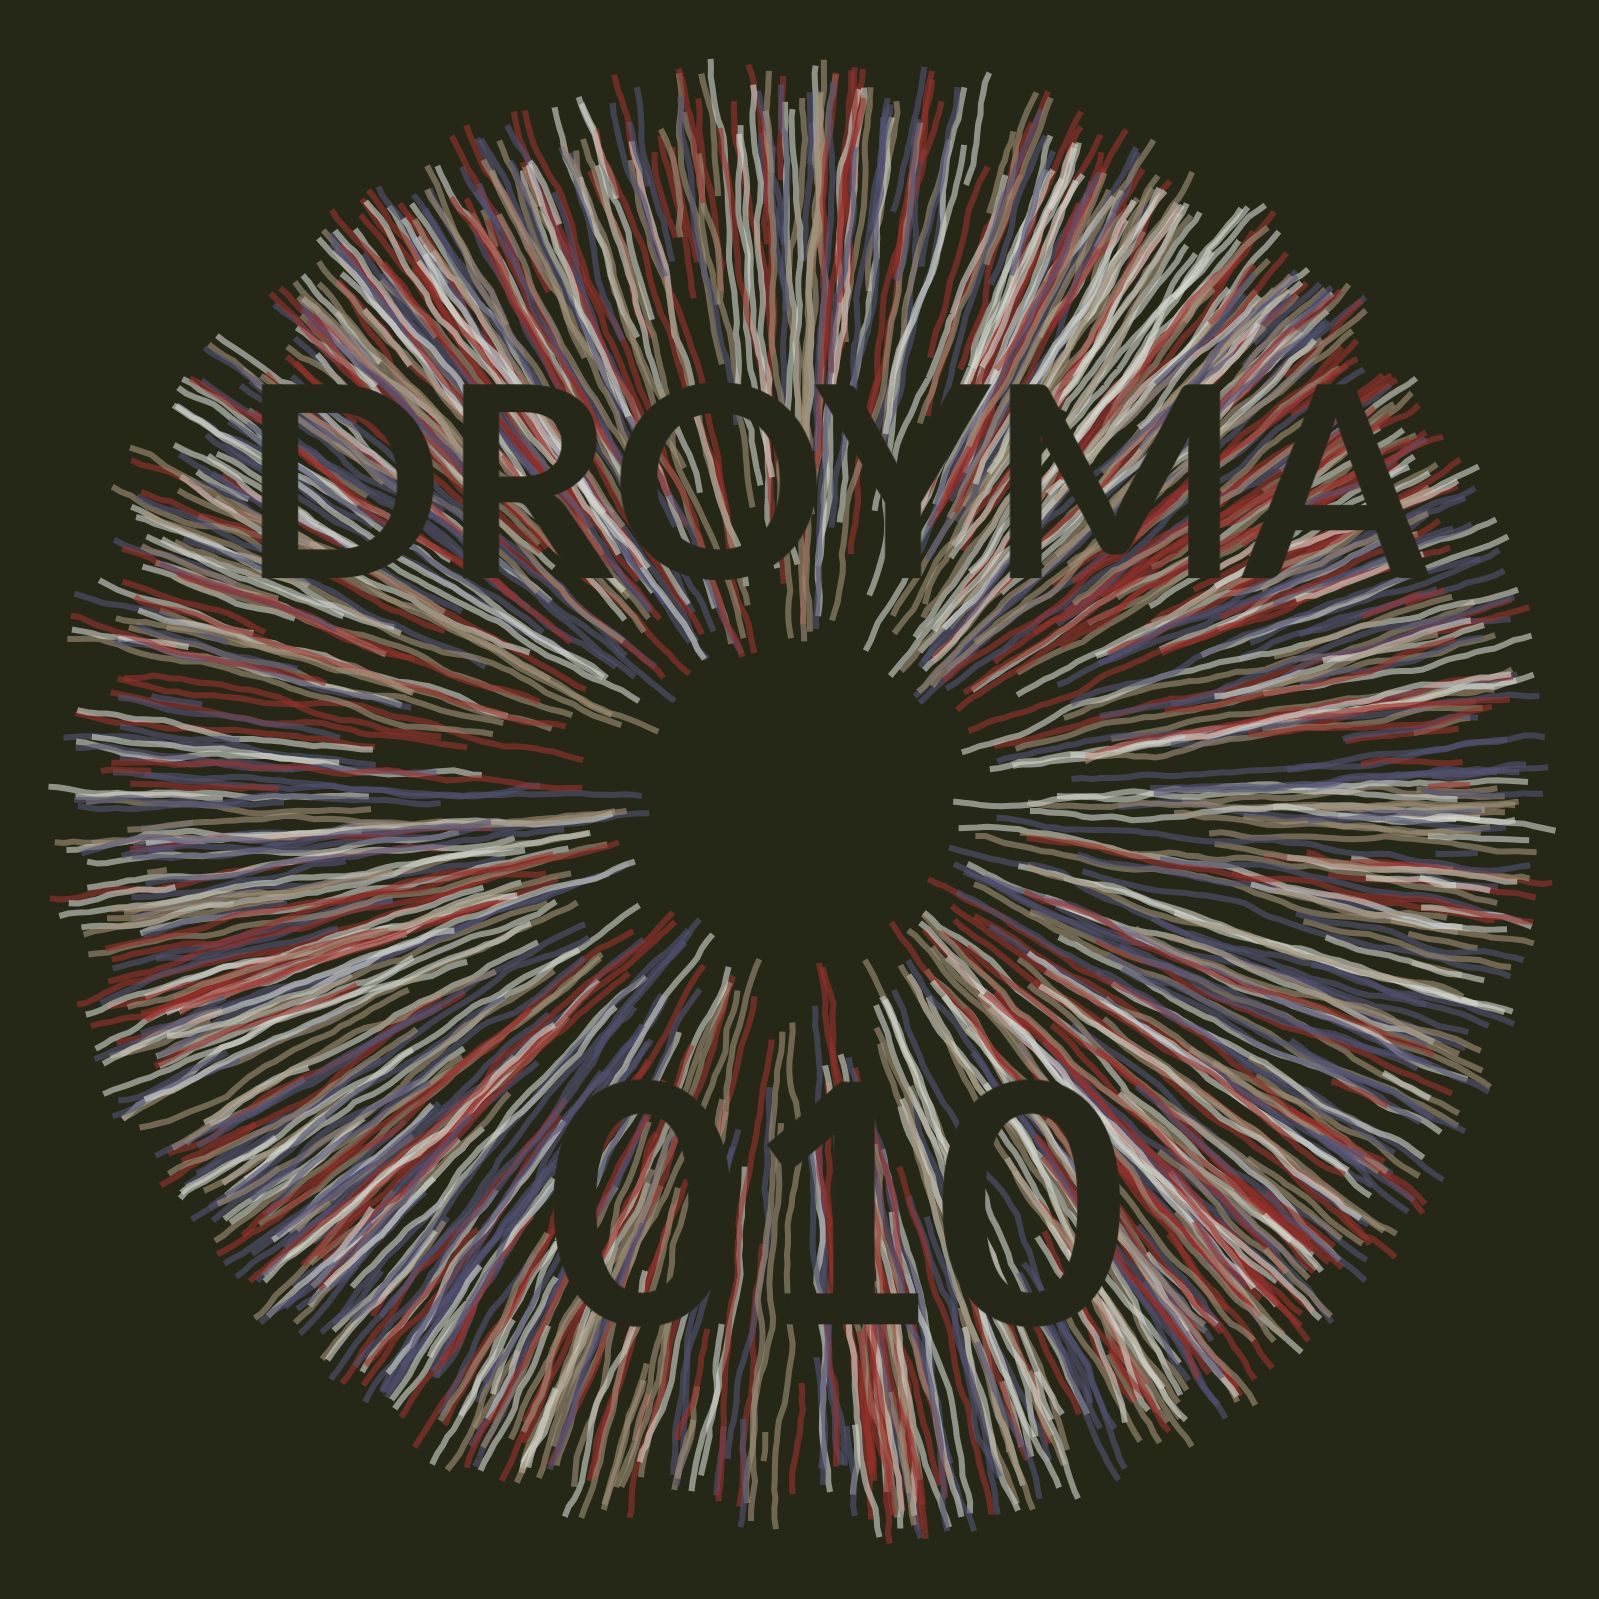 Preuzimanje datoteka Droyma Mix 010 - April 2019